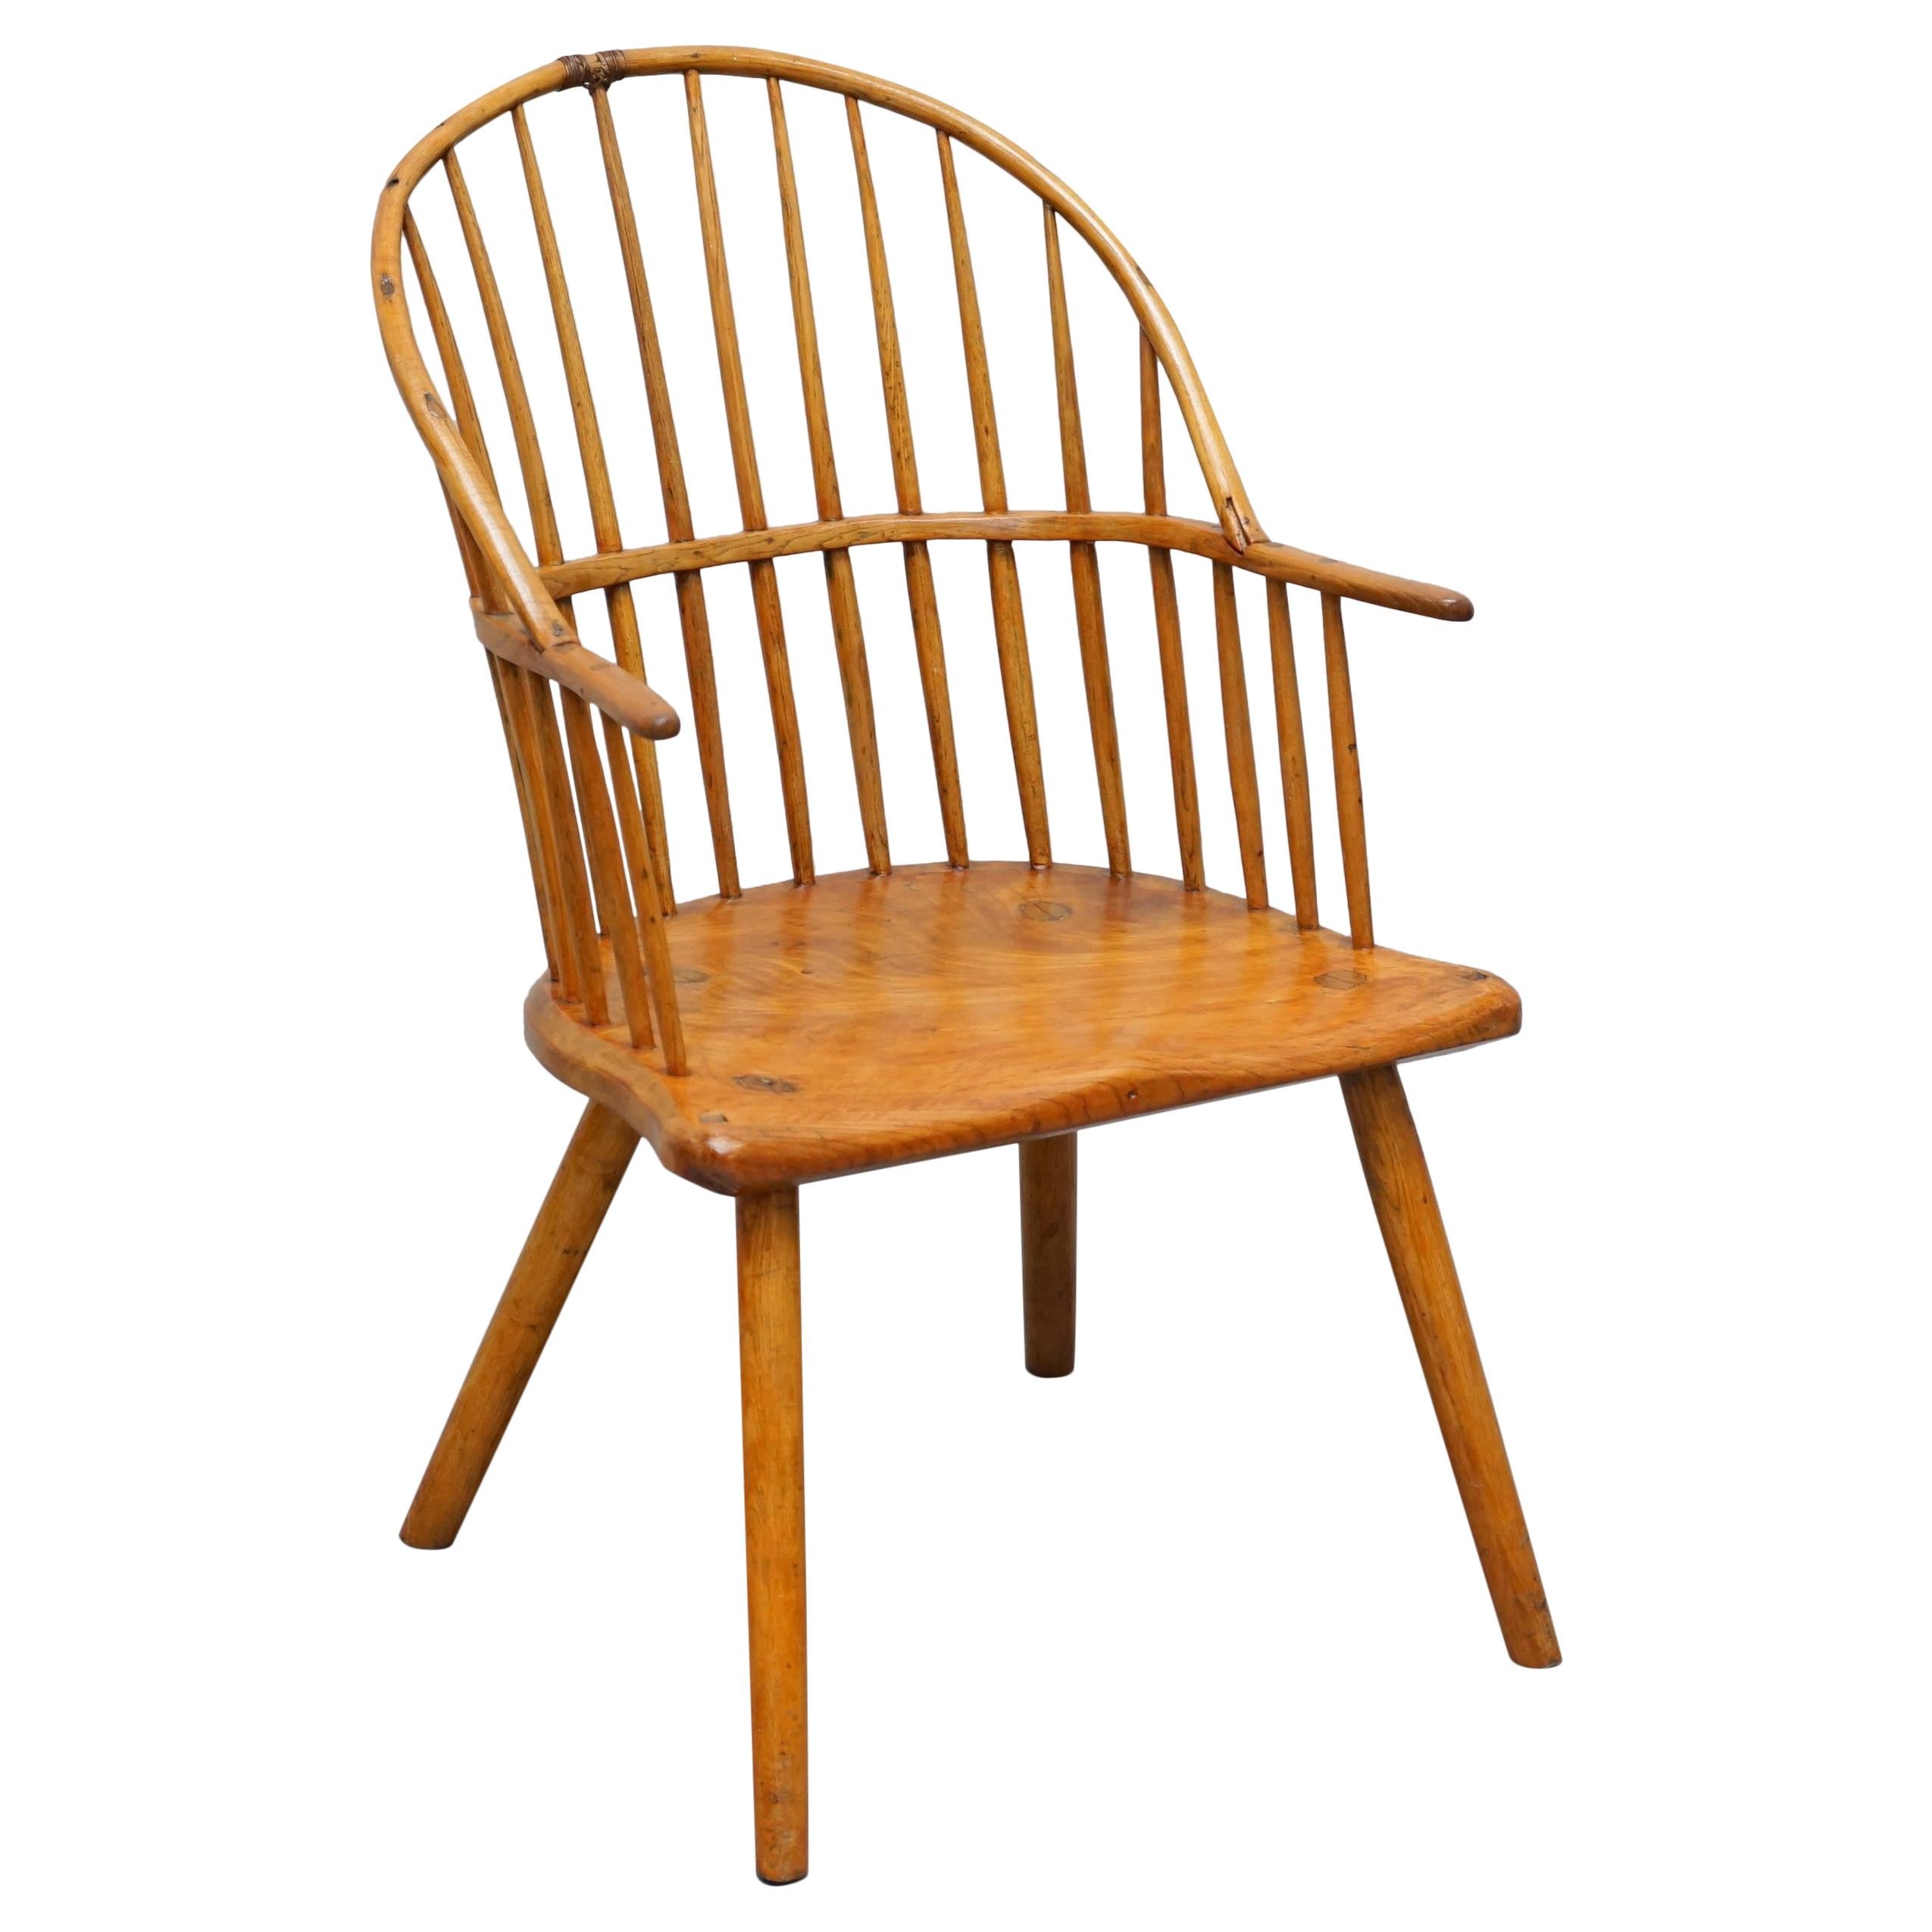 Atemberaubender Windsor-Sessel aus Eibenholz im Primate-Design aus dem 18. Jahrhundert